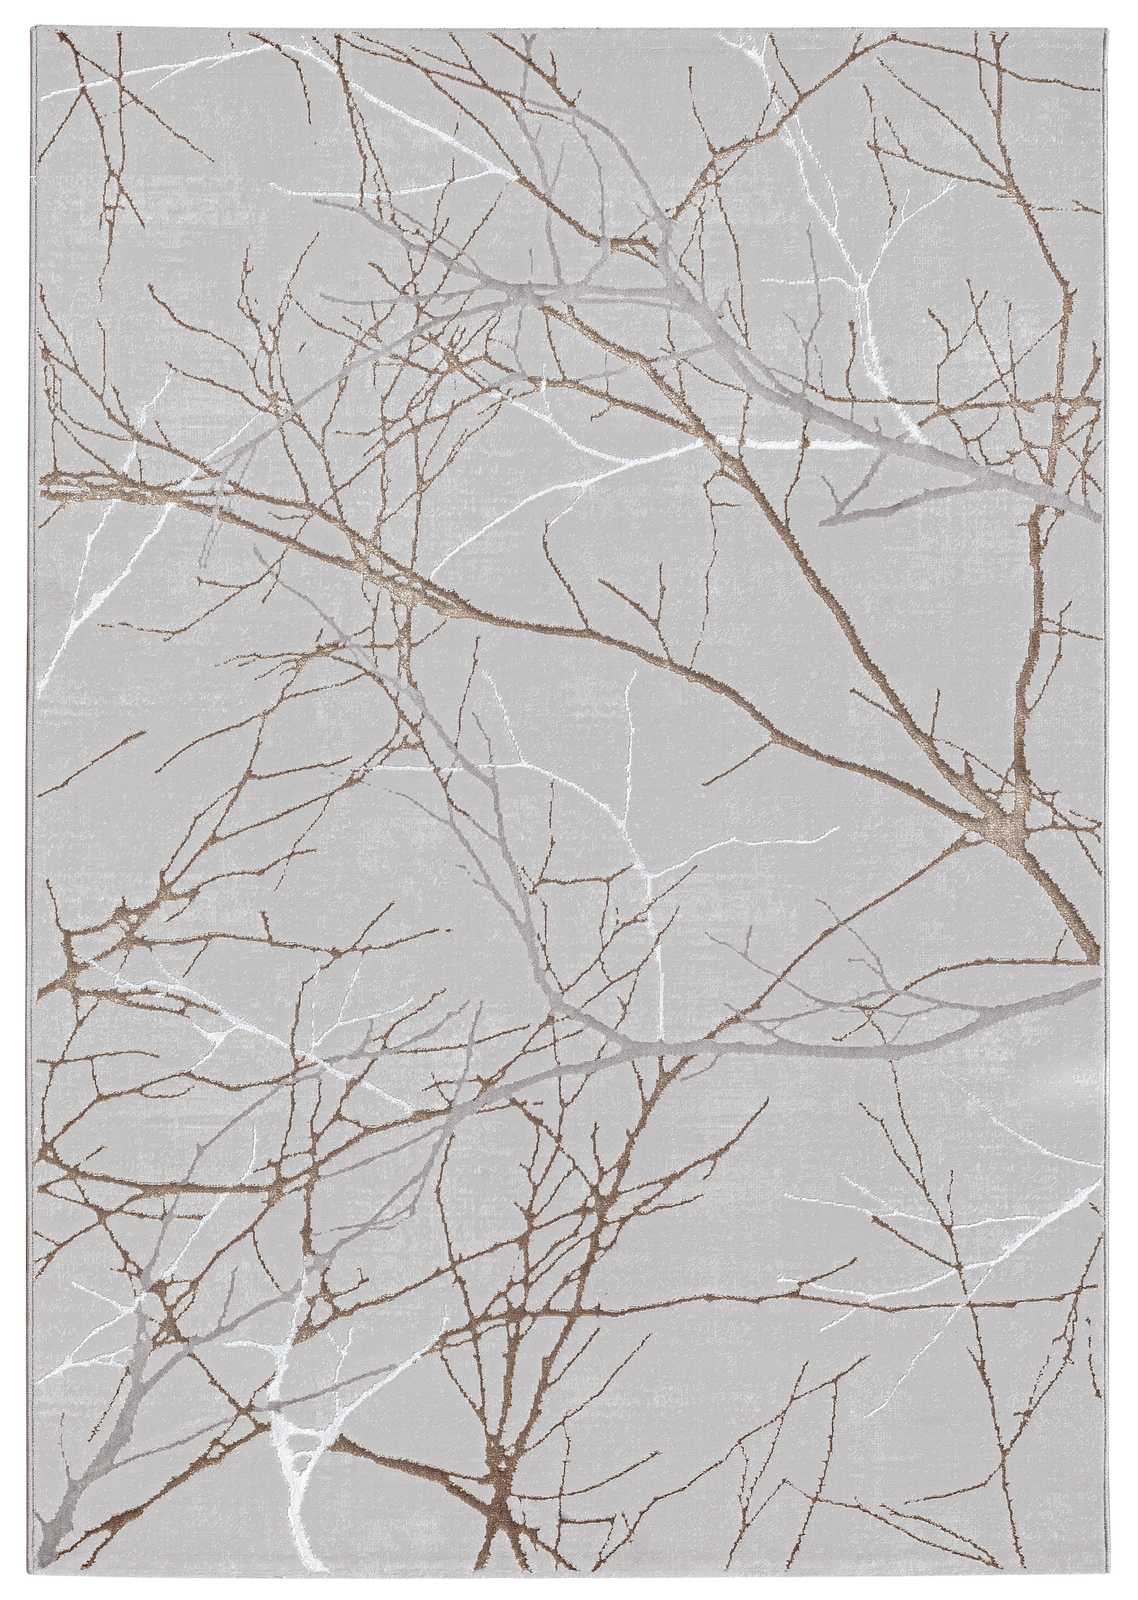             Bemusterter Hochflor Teppich in Grau – 230 x 160 cm
        